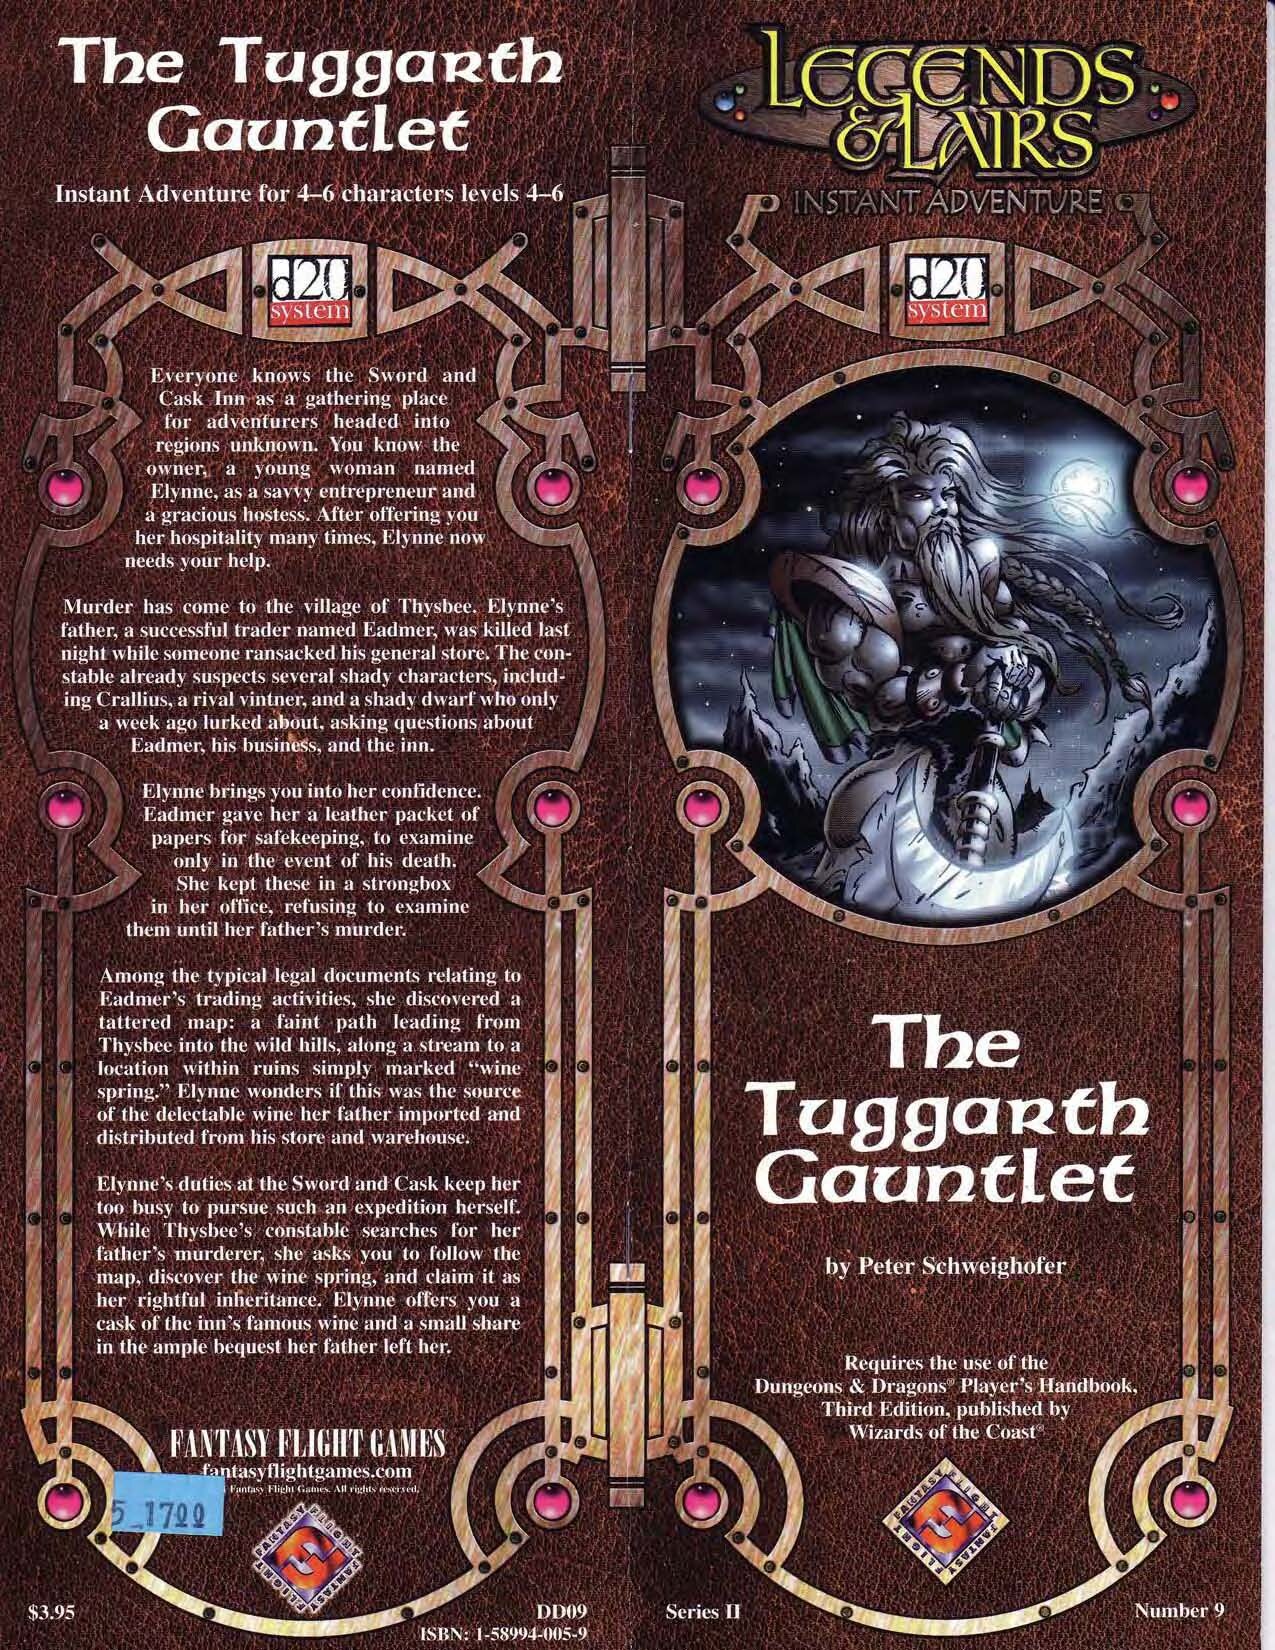 The Tuggarth Gauntlet